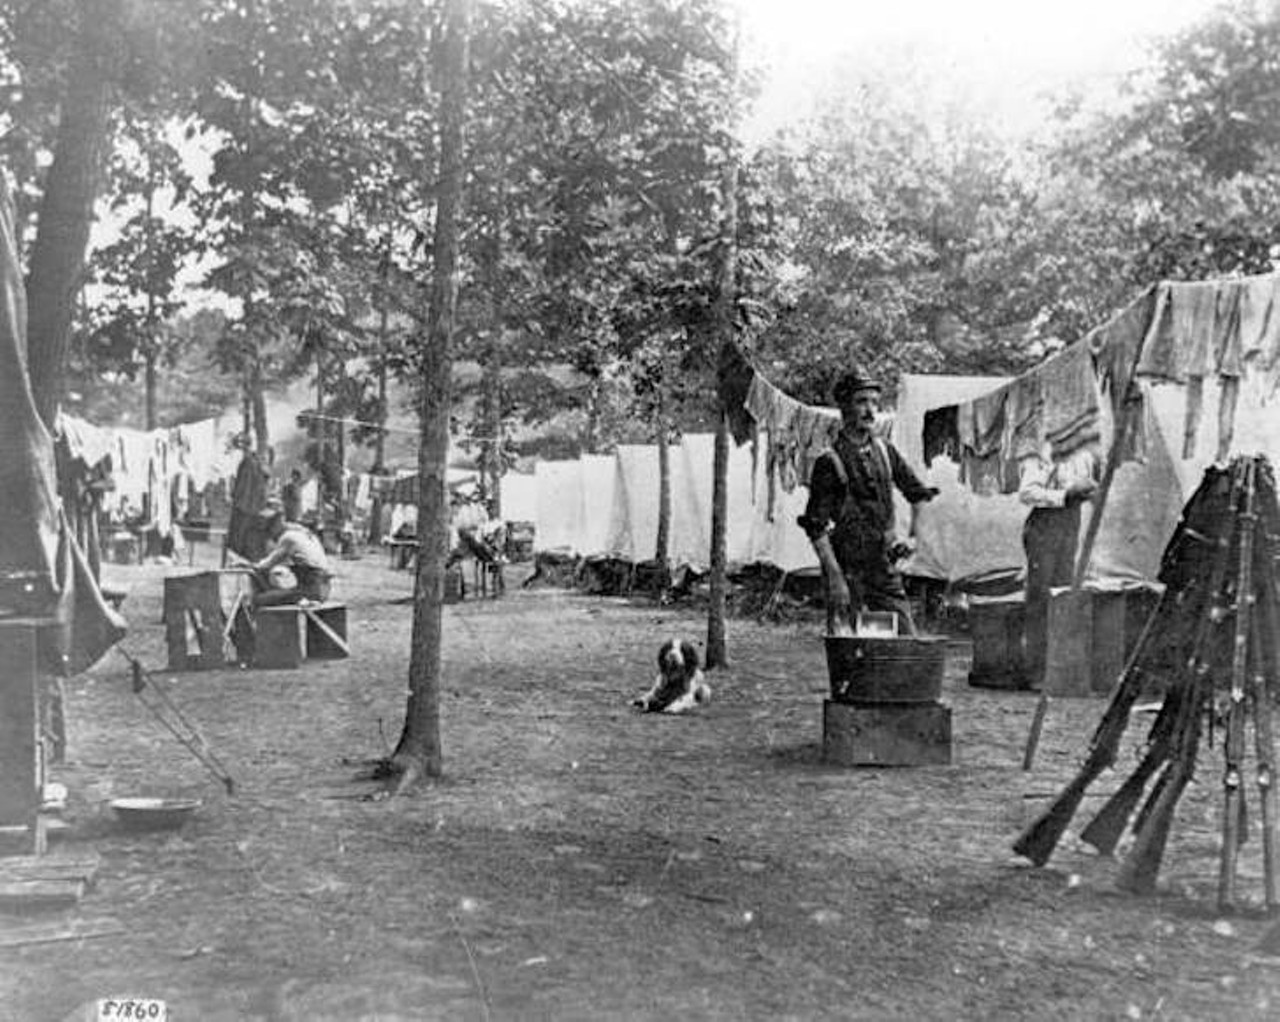 Spanish-American war camp scene in Tampa, 1898.